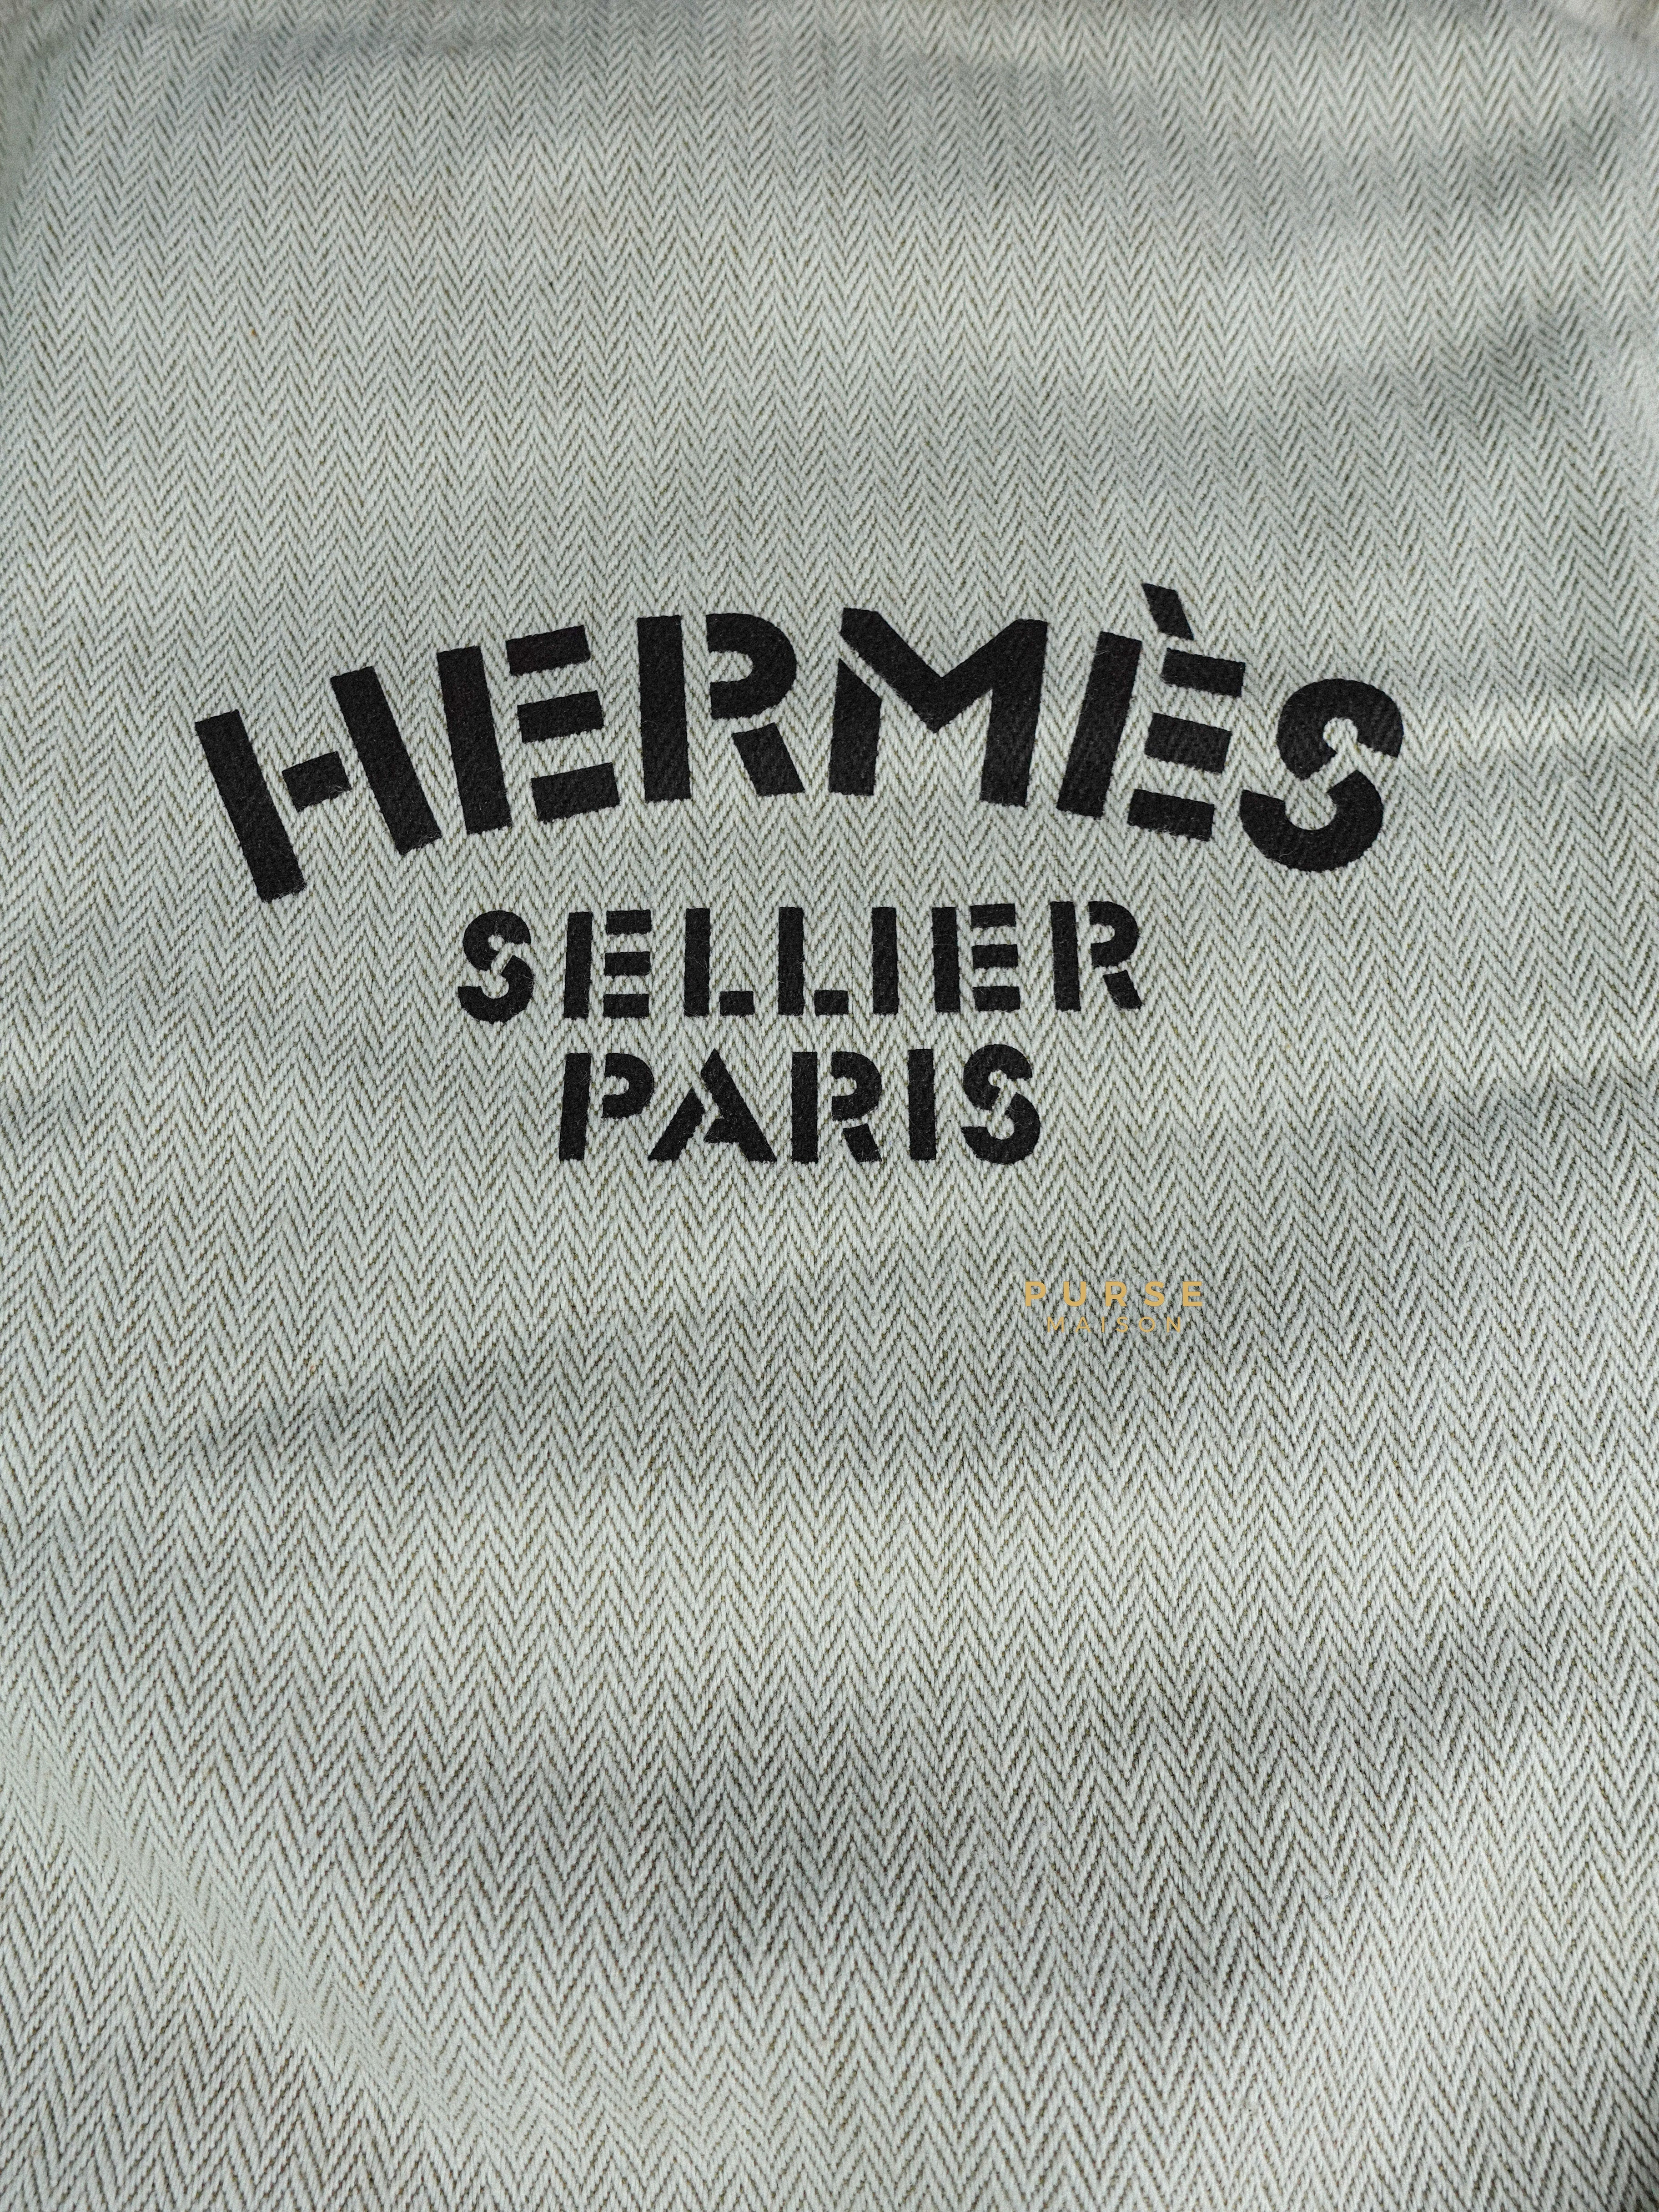 Hermes Maline Grooming Bag (Stamp Y) | Purse Maison Luxury Bags Shop